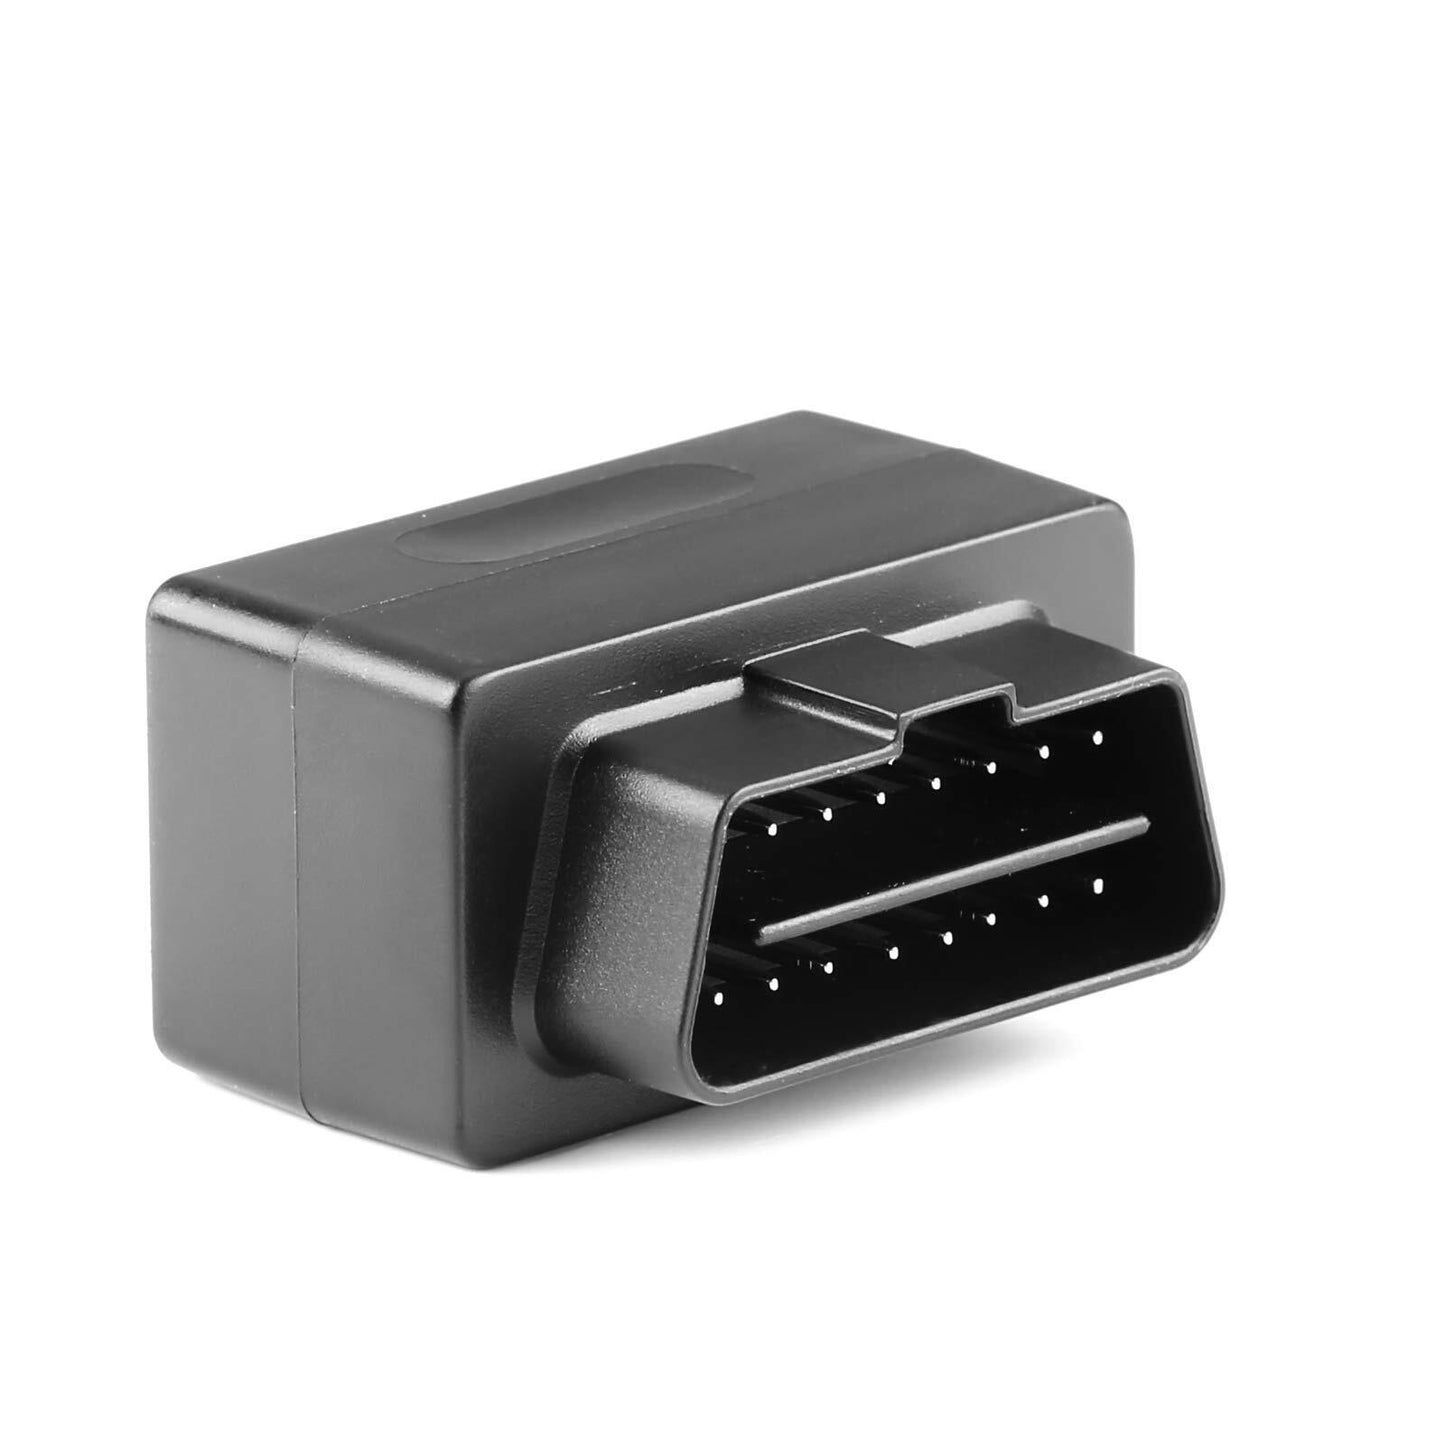 OBD ENET WIFI USB Adapter DOIP til BMW FG-serien BimmerCode E-SYS Bootmod3